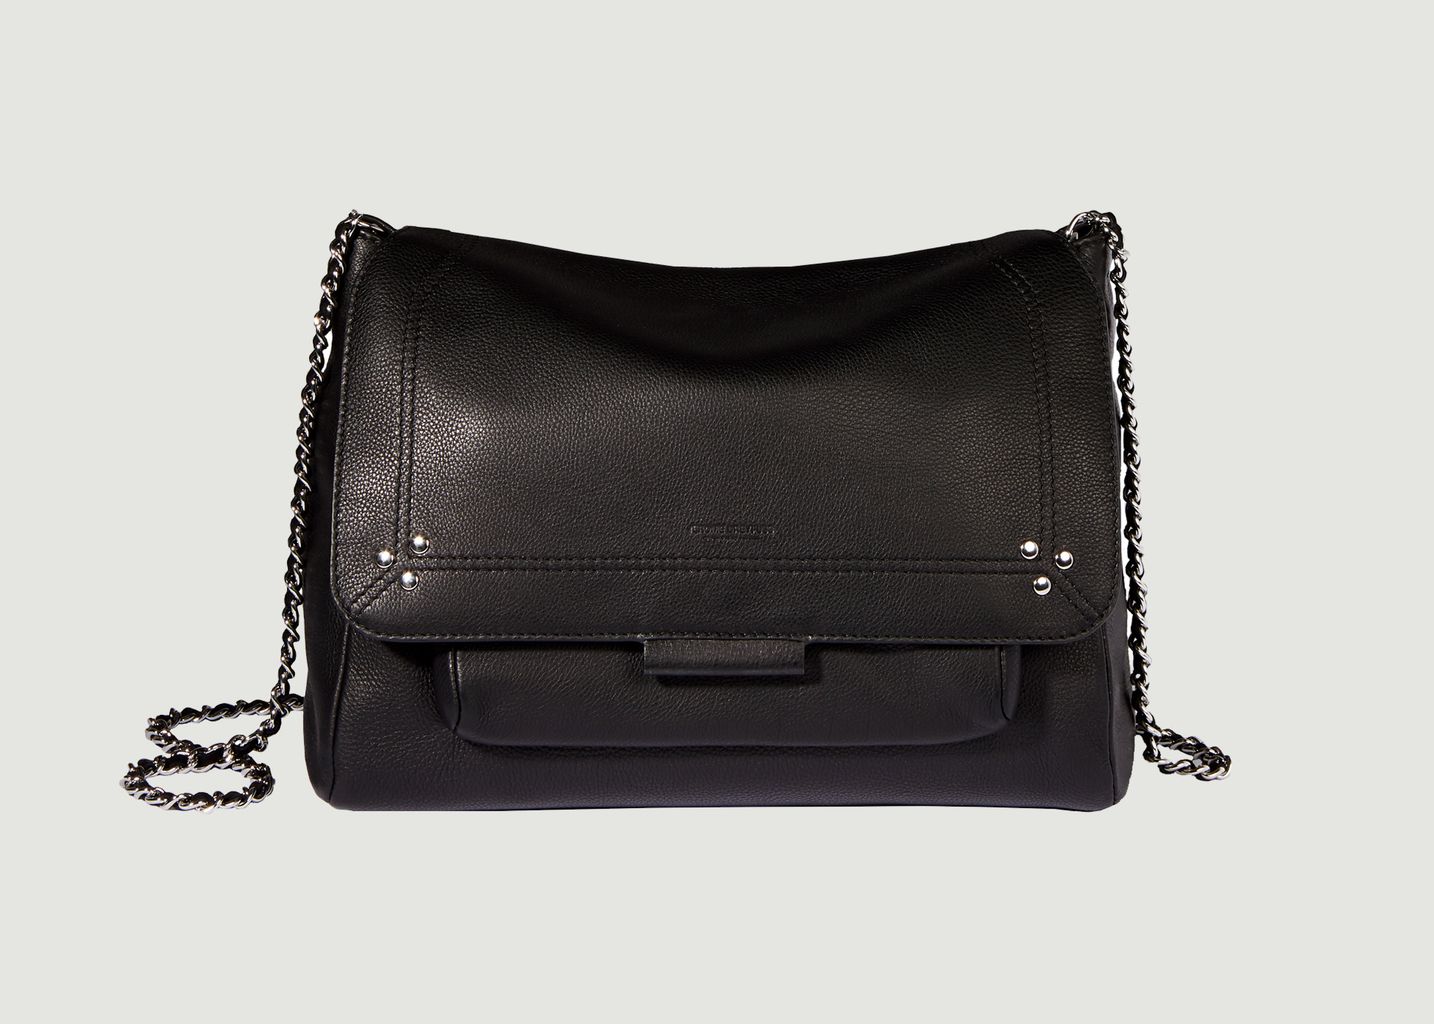 Jerome Dreyfuss Paris Black Lulu L Leather Bag